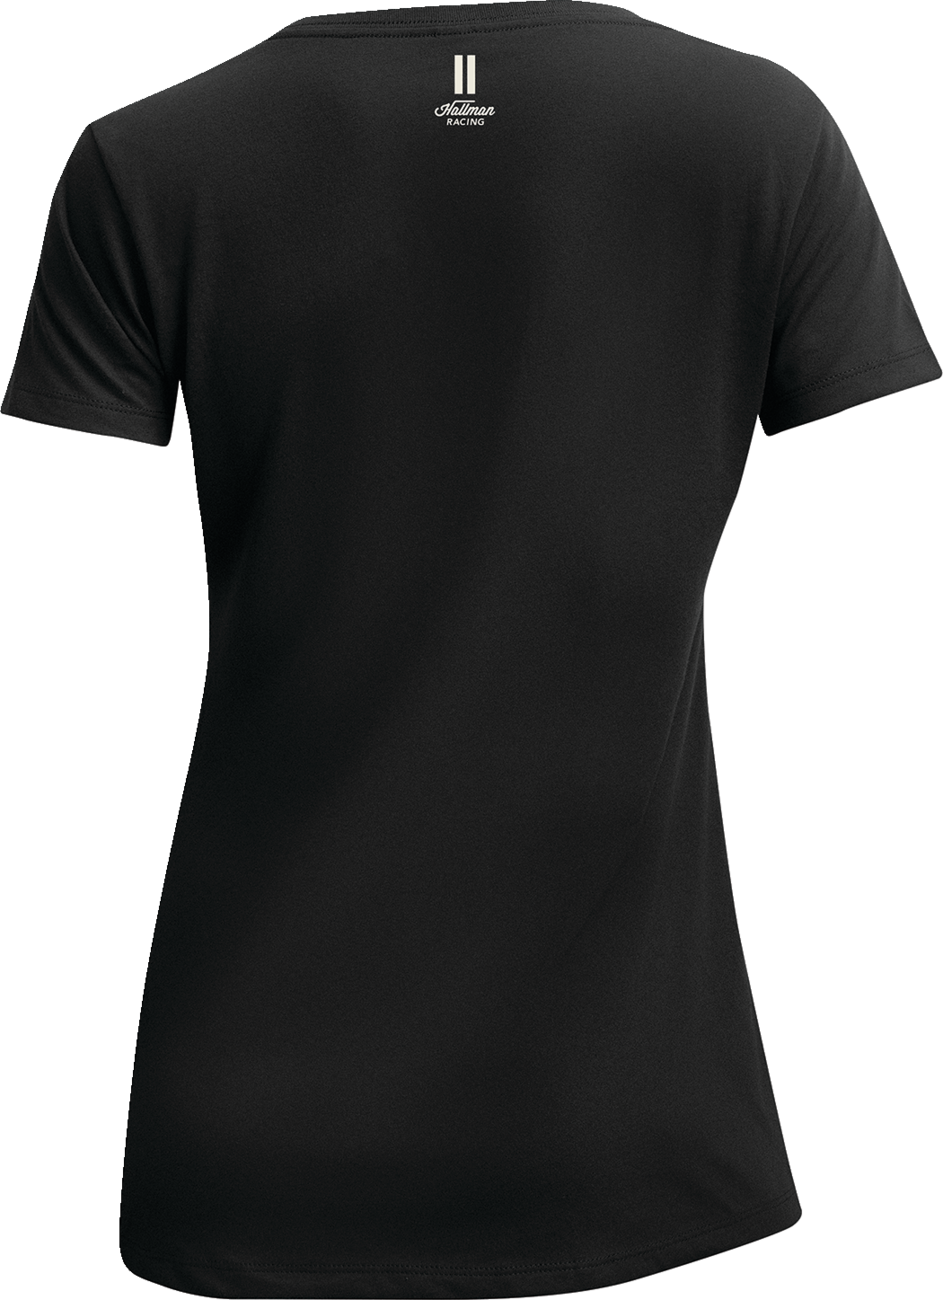 THOR Women's Hallman Heritage T-Shirt - Black - Small 3031-4138